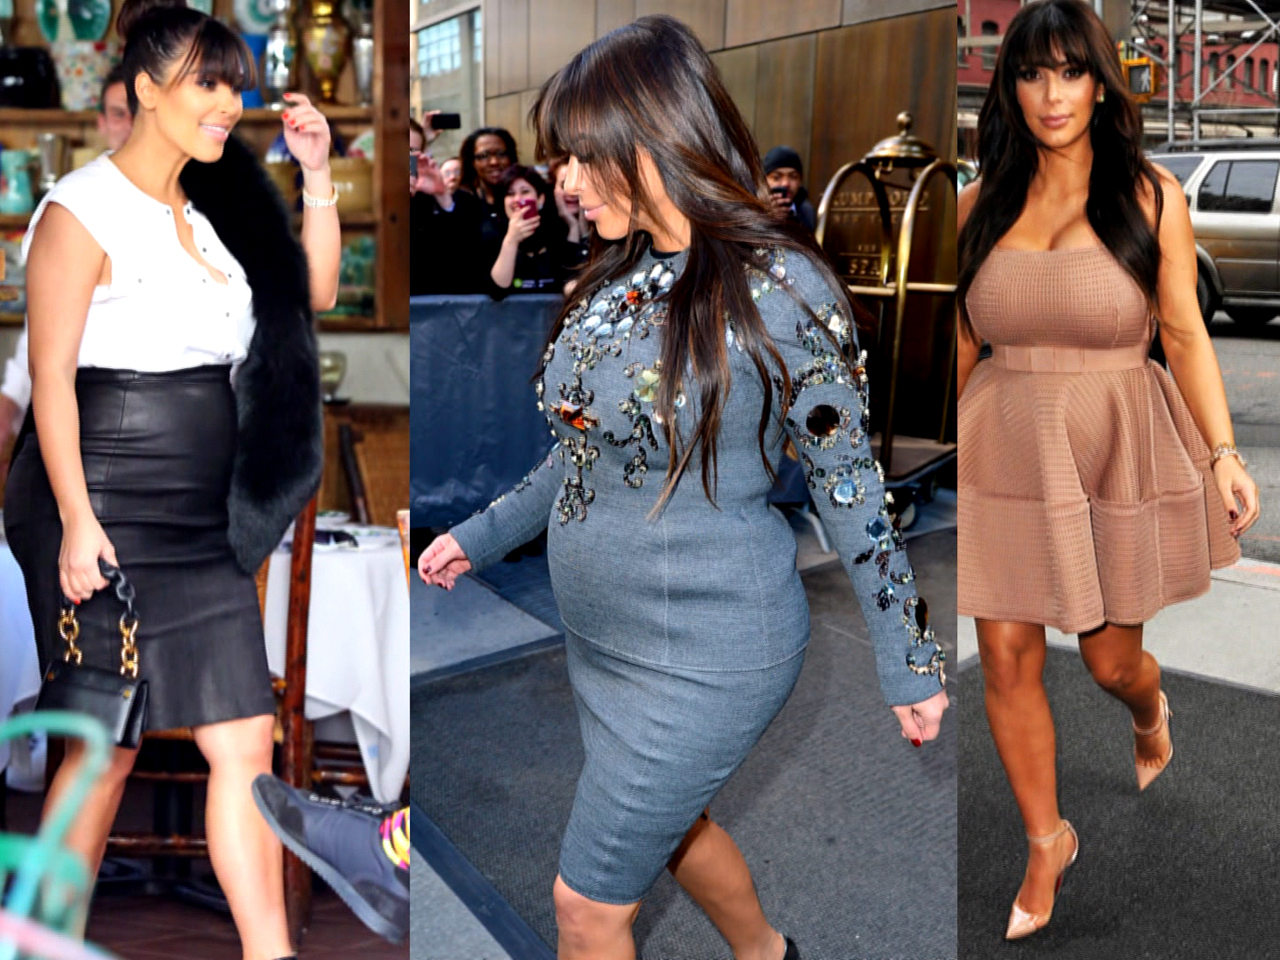 Before pregnancy, I'd have said Kim Kardashian's maternity